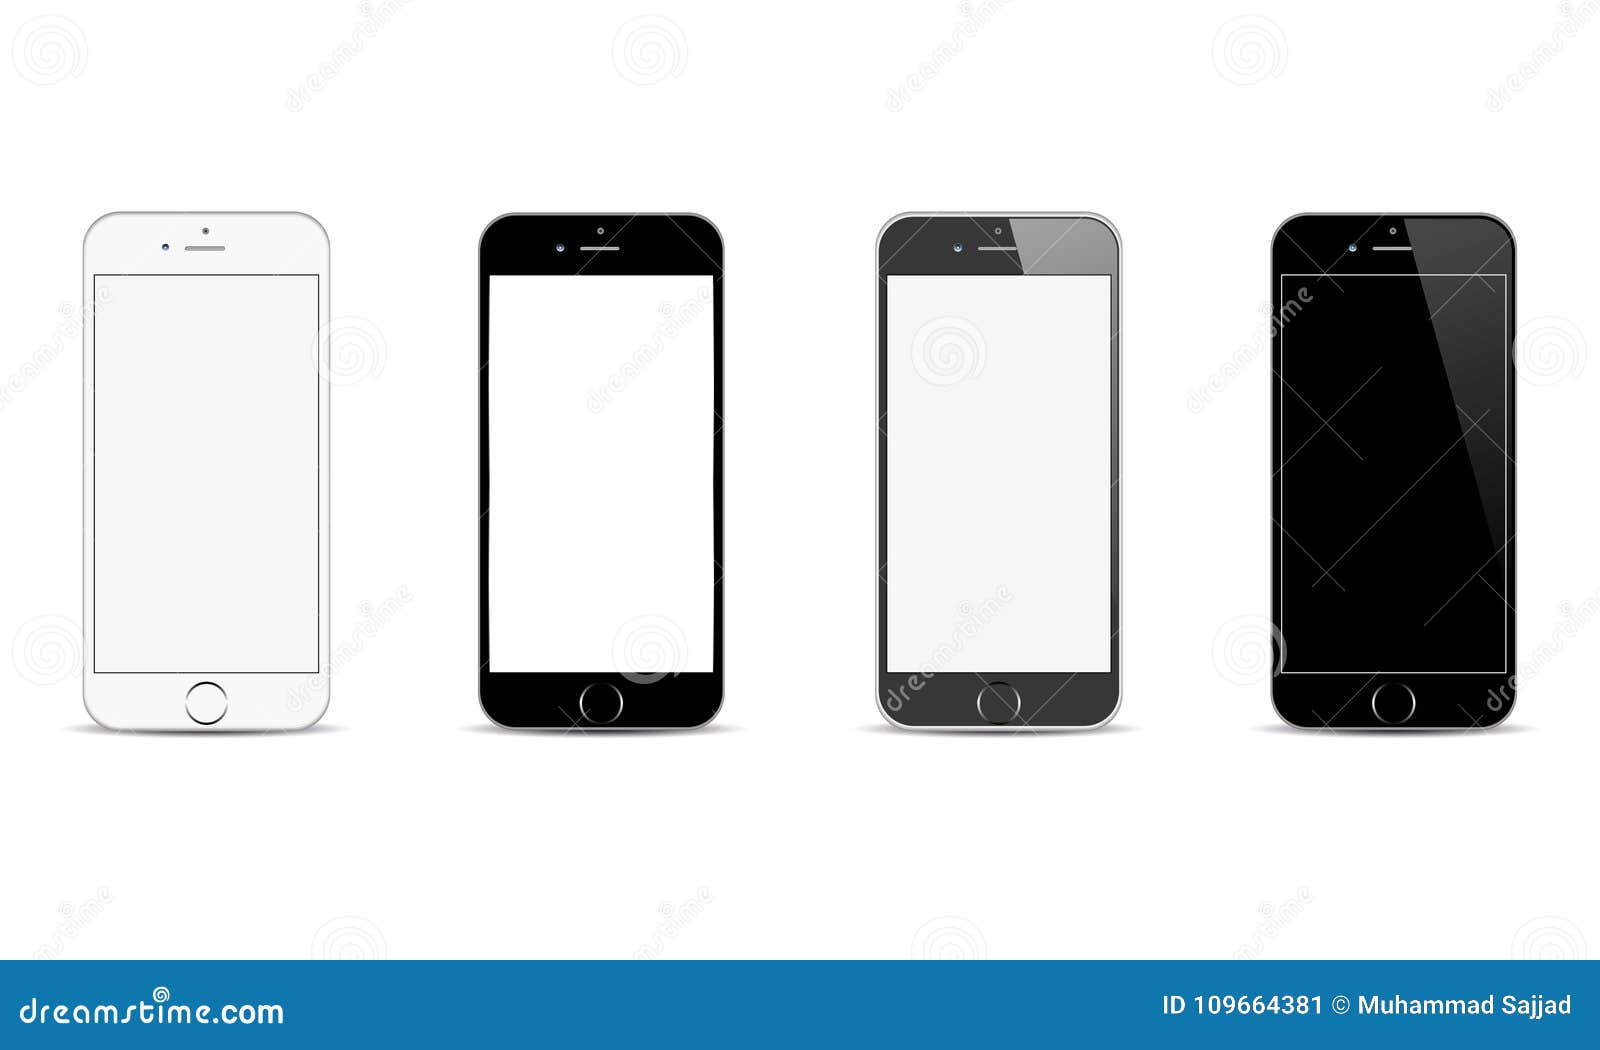 Android Phones Sketch Mockups | Sketch Elements